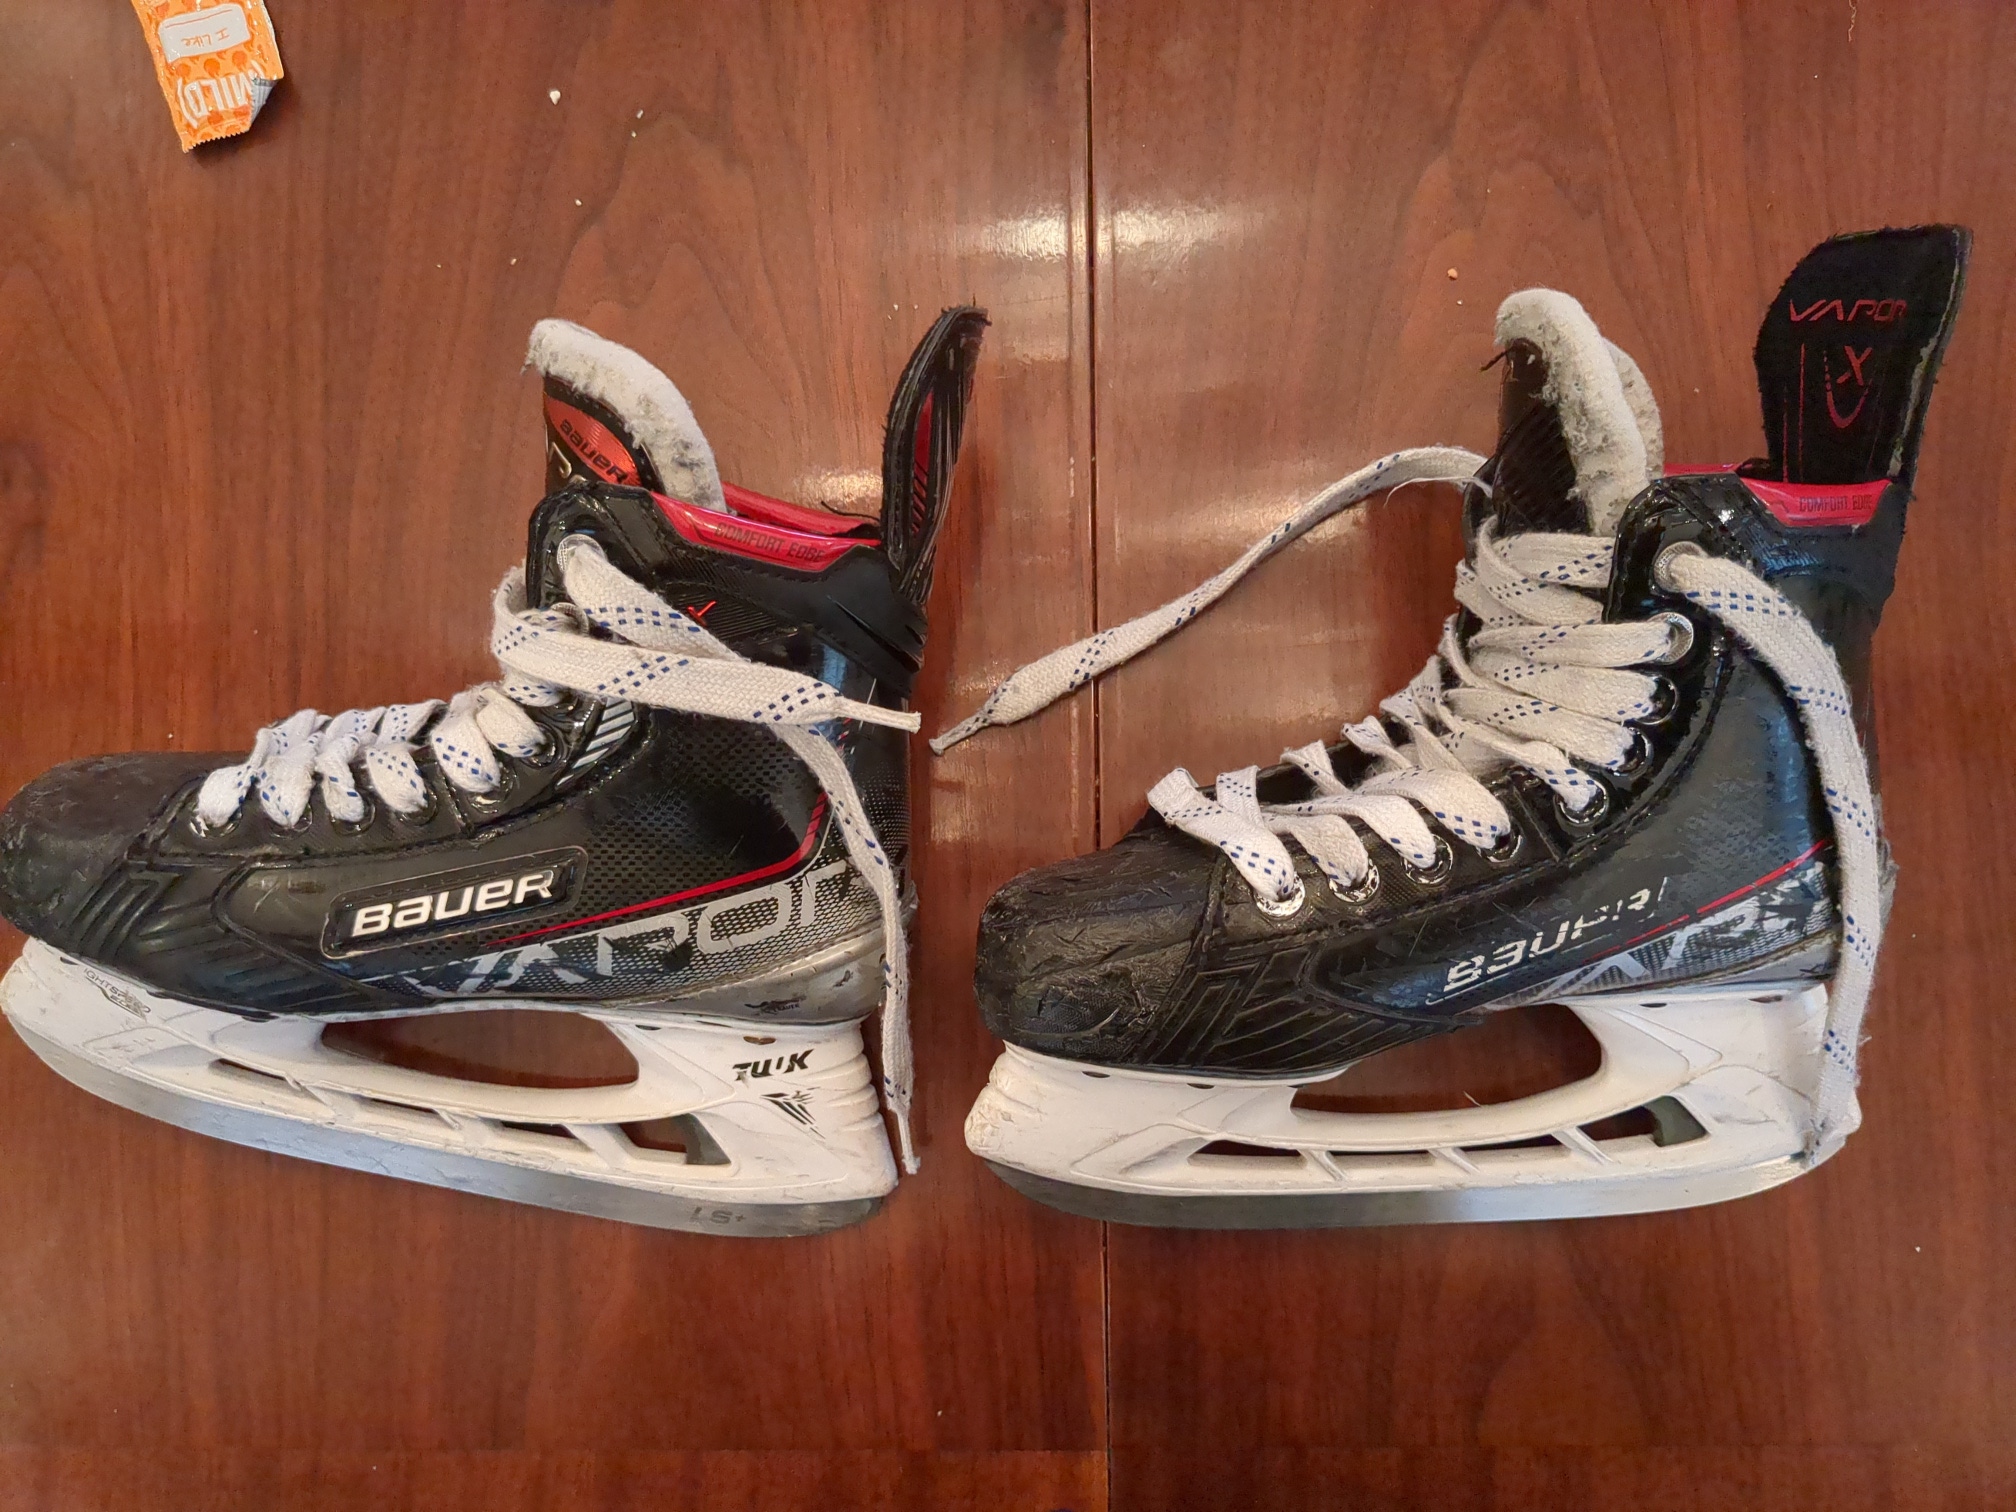 Used Bauer Vapor 3X Hockey Skates Size 4